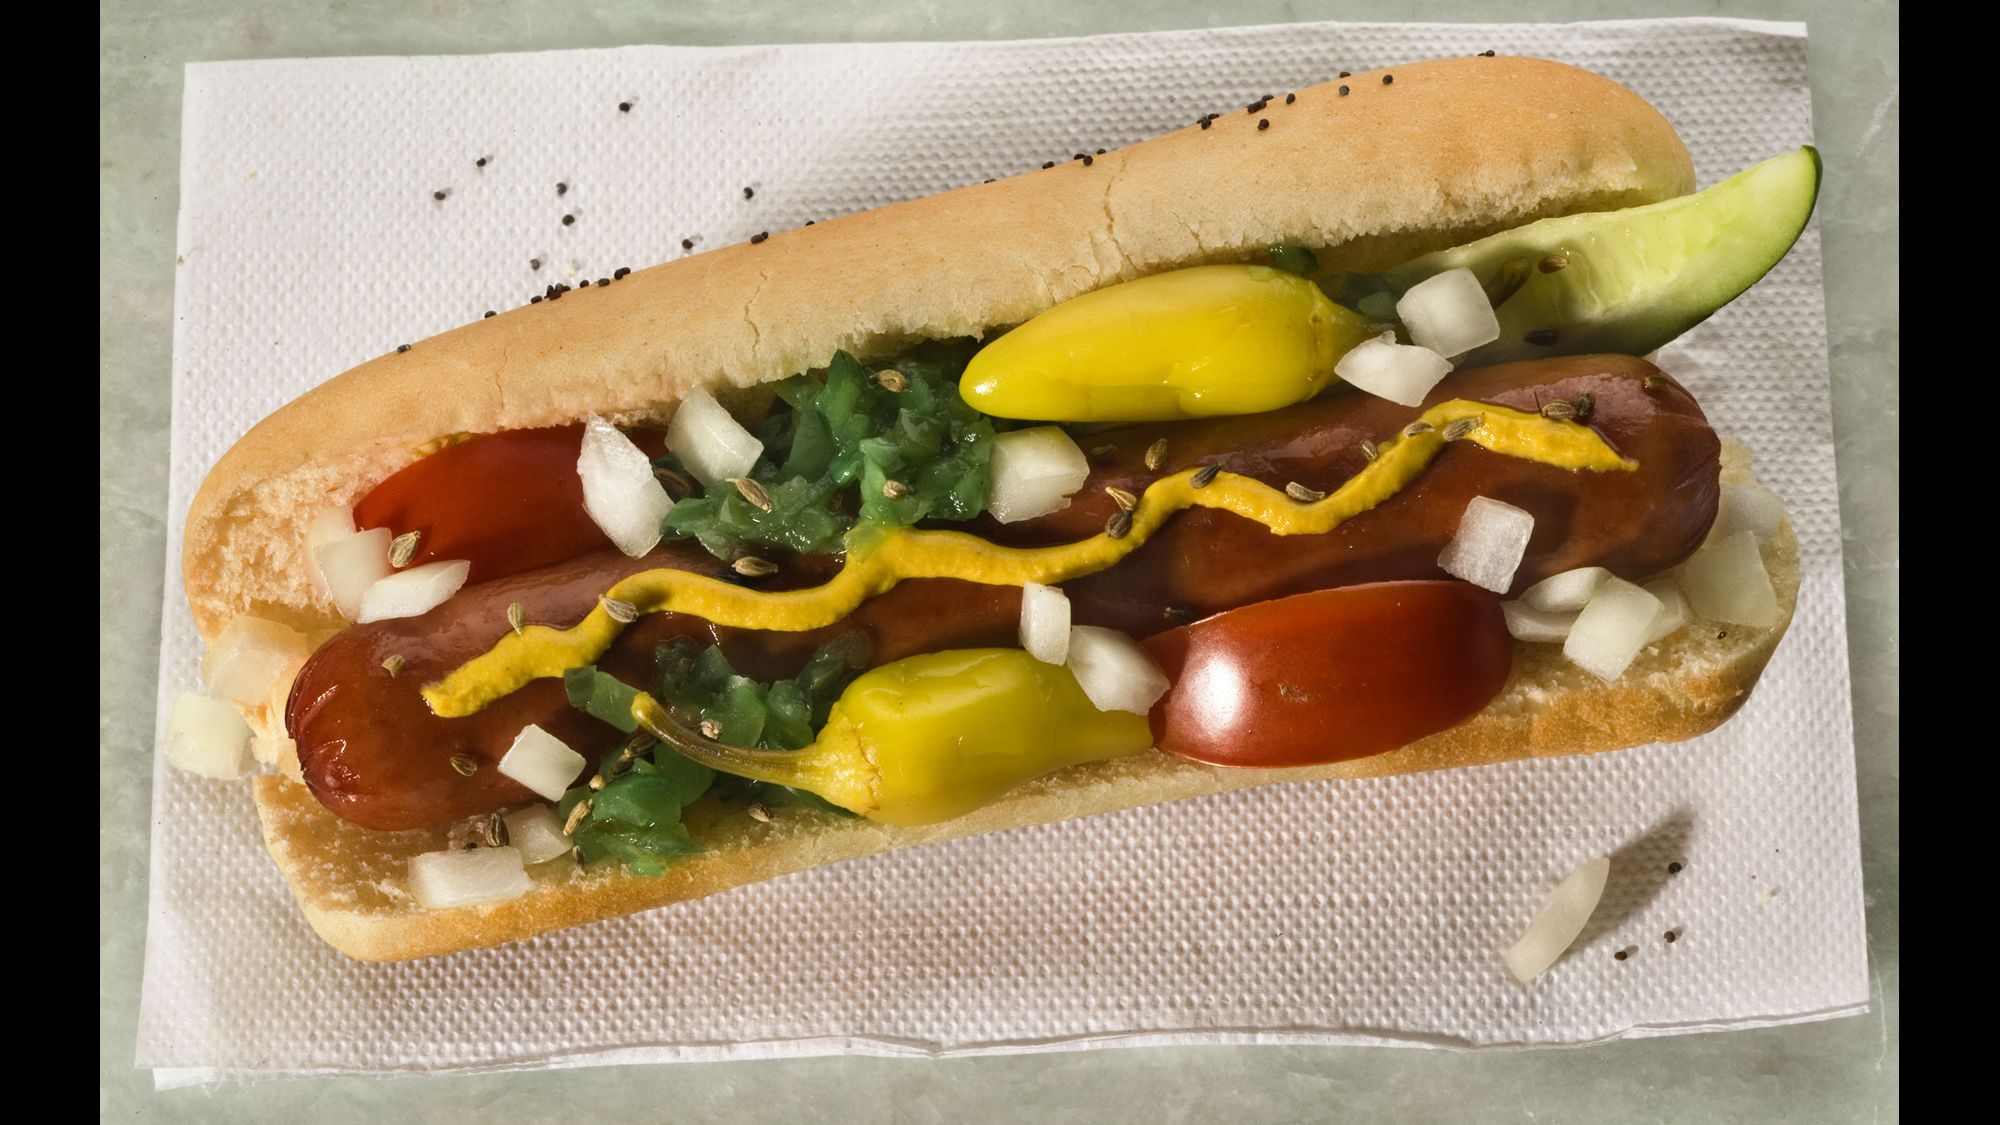 Papa Gino's - We're celebrating National Hot Dog Day the way New